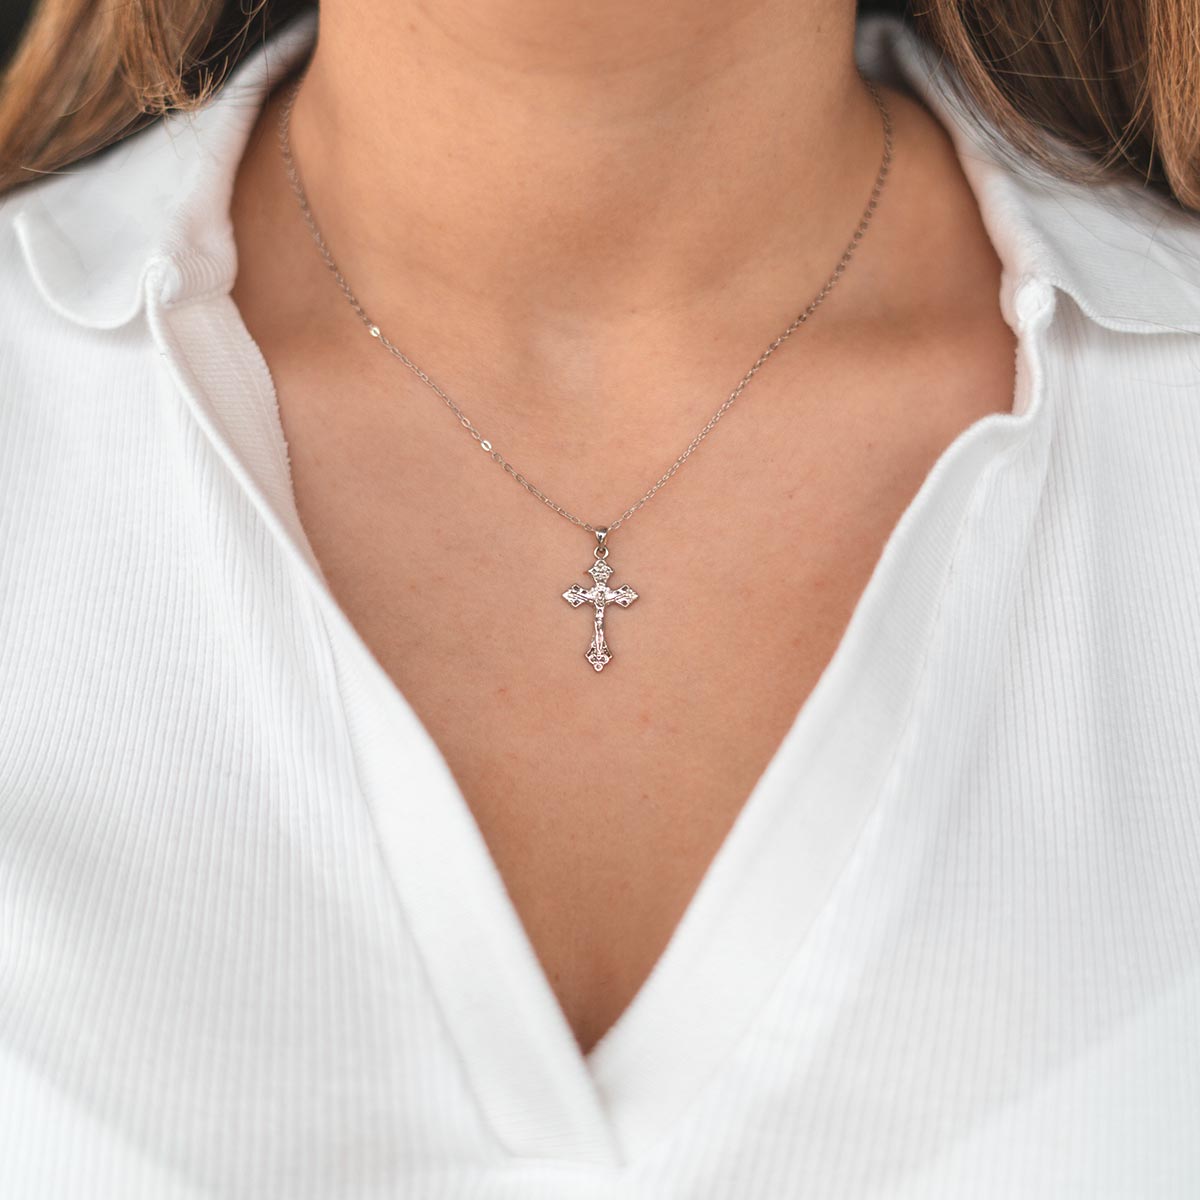 Mini Stylized Cross Necklace